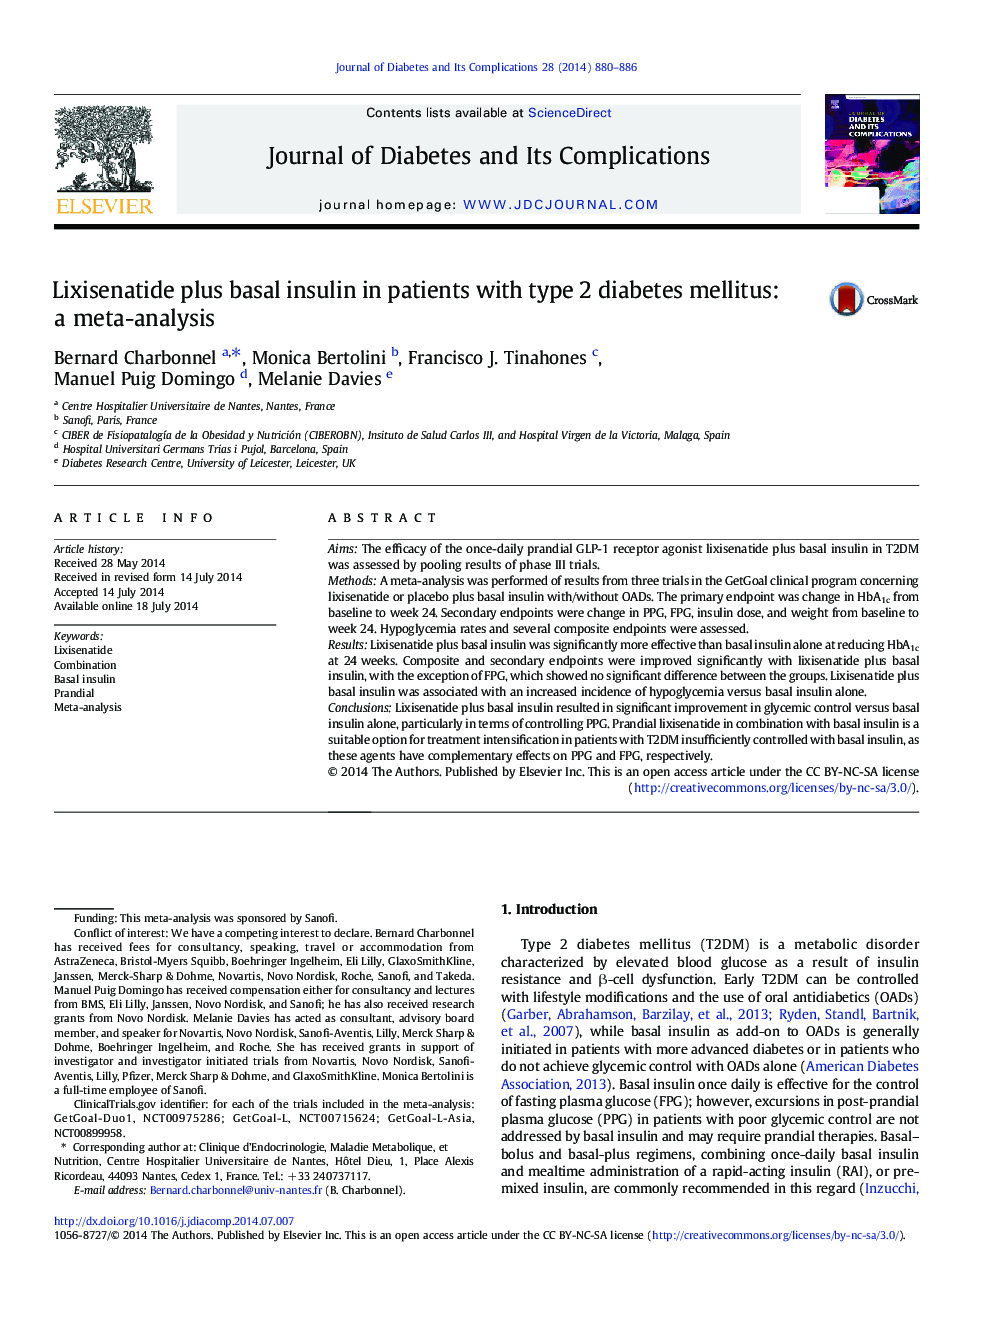 Lixisenatide plus basal insulin in patients with type 2 diabetes mellitus: a meta-analysis